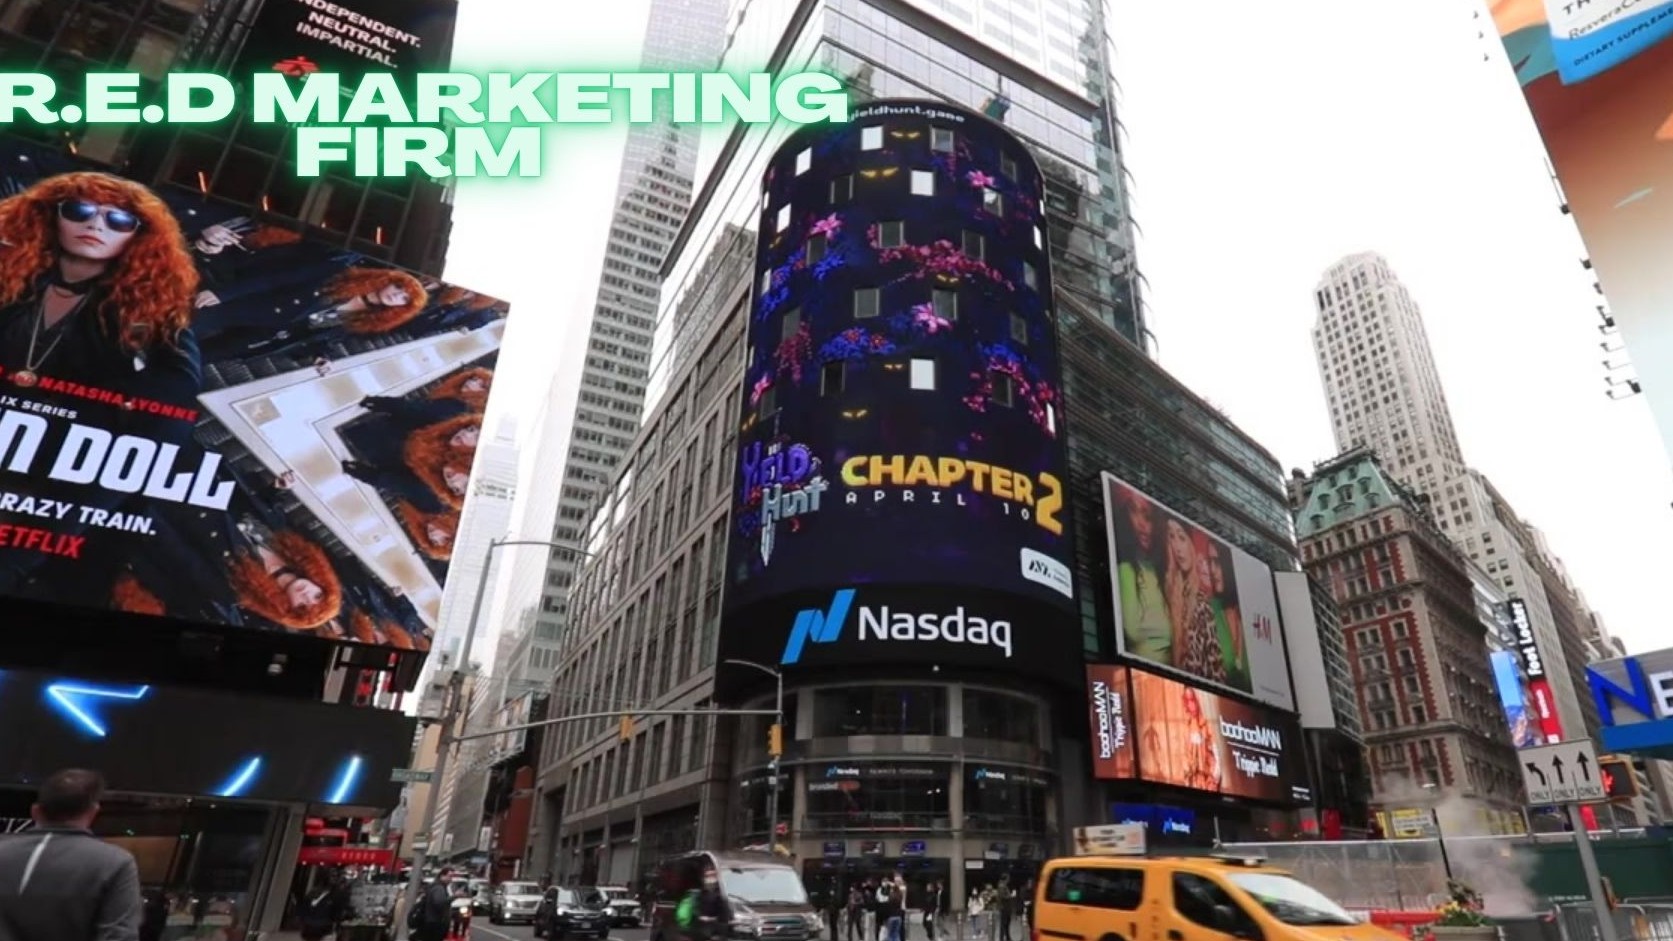 Times Square, NYC NASDAQ Digital Billboard Campaign For NFT Project: Case Study